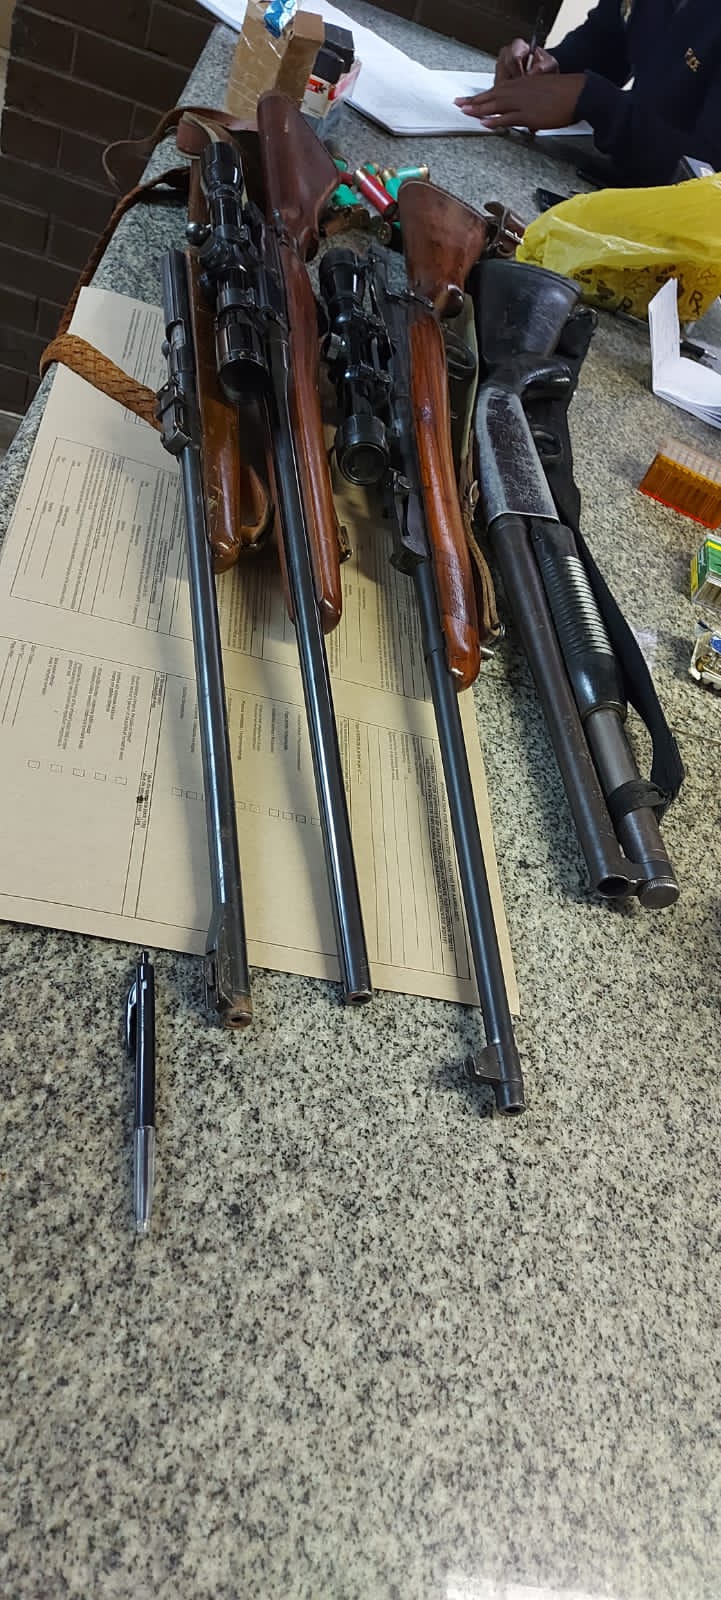 Four firearms seized by police